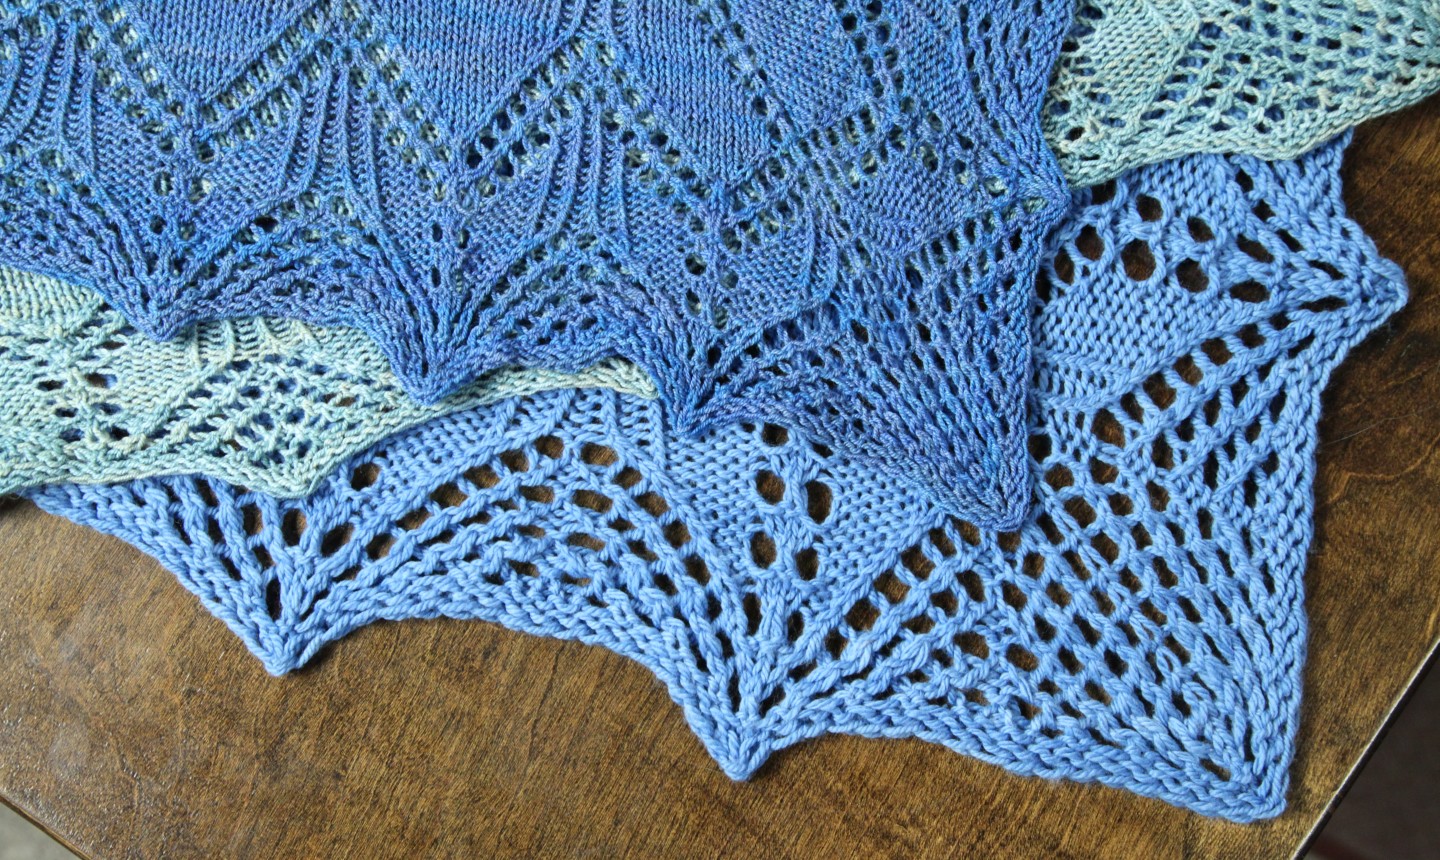 lace shawl detail